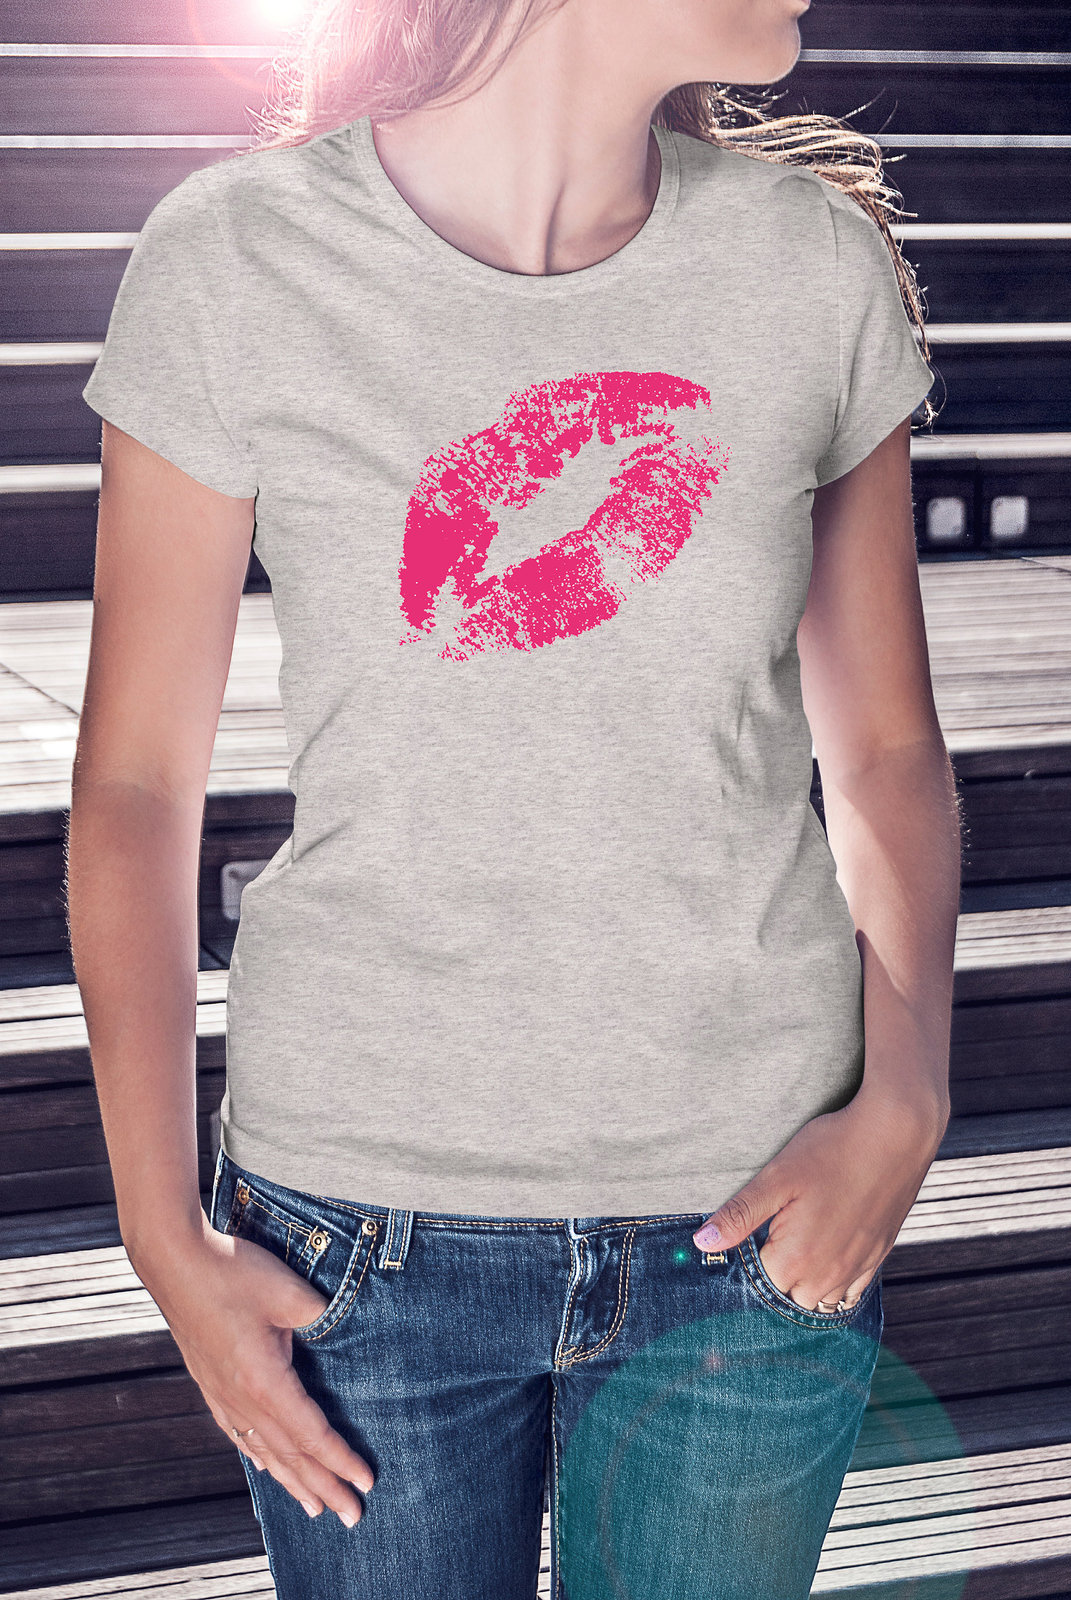 Pink Lips T Shirt Women S Clothing Lipstick Kiss Tshirt Summer Fashion Tee T Shirts And Tank Tops